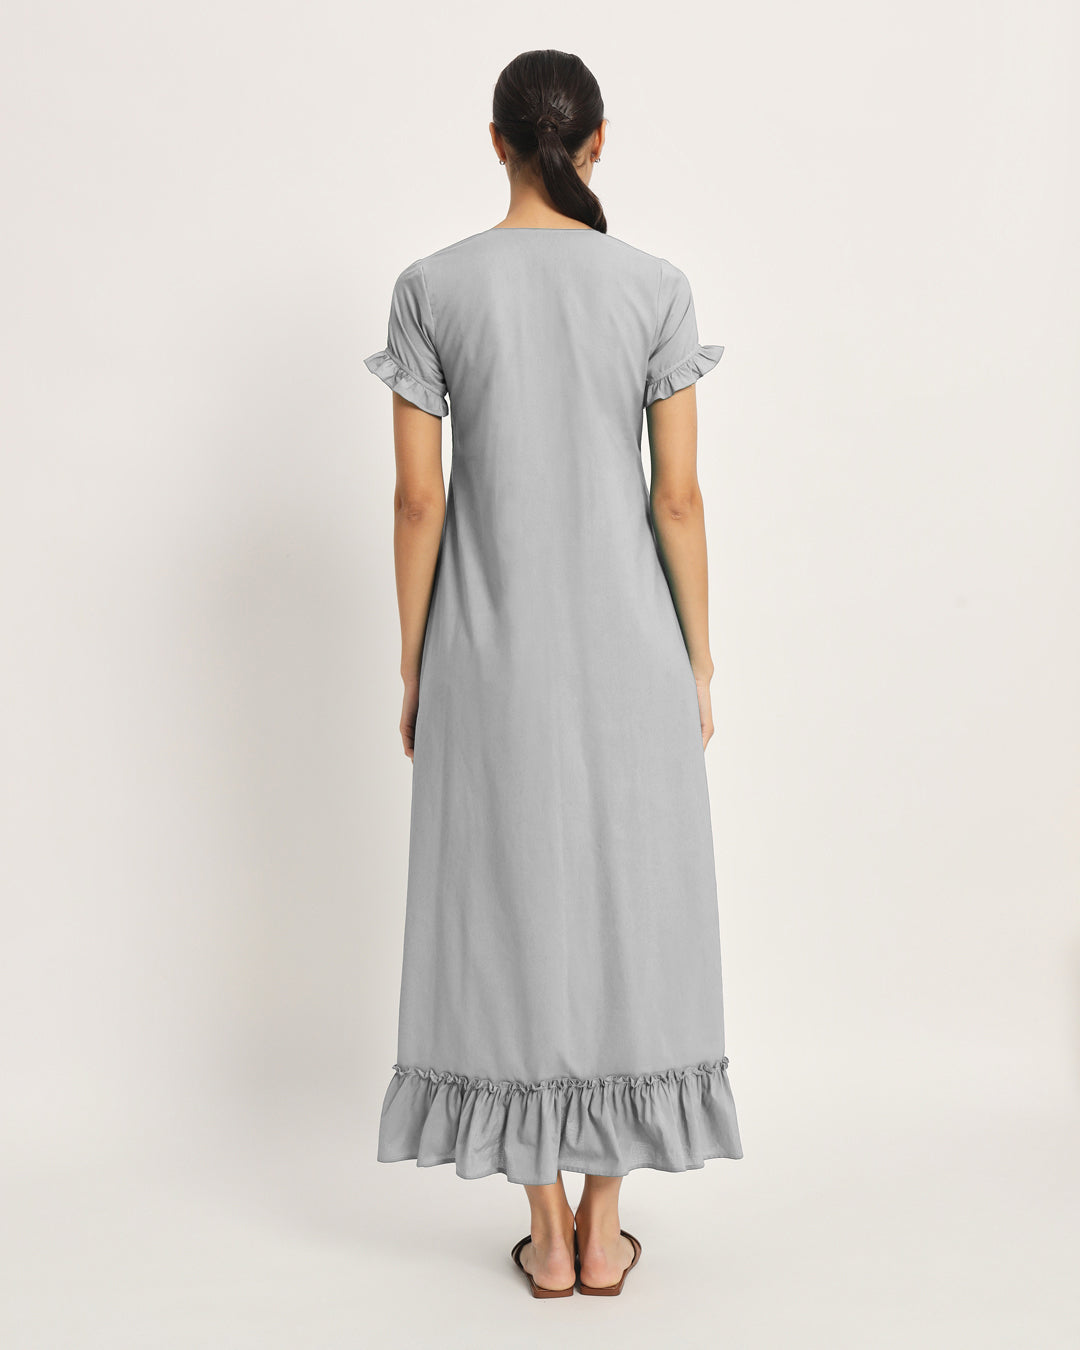 Combo: Iced Grey & Plum Passion Bumpin' & Stylin' Maternity & Nursing Dress - Set of 2